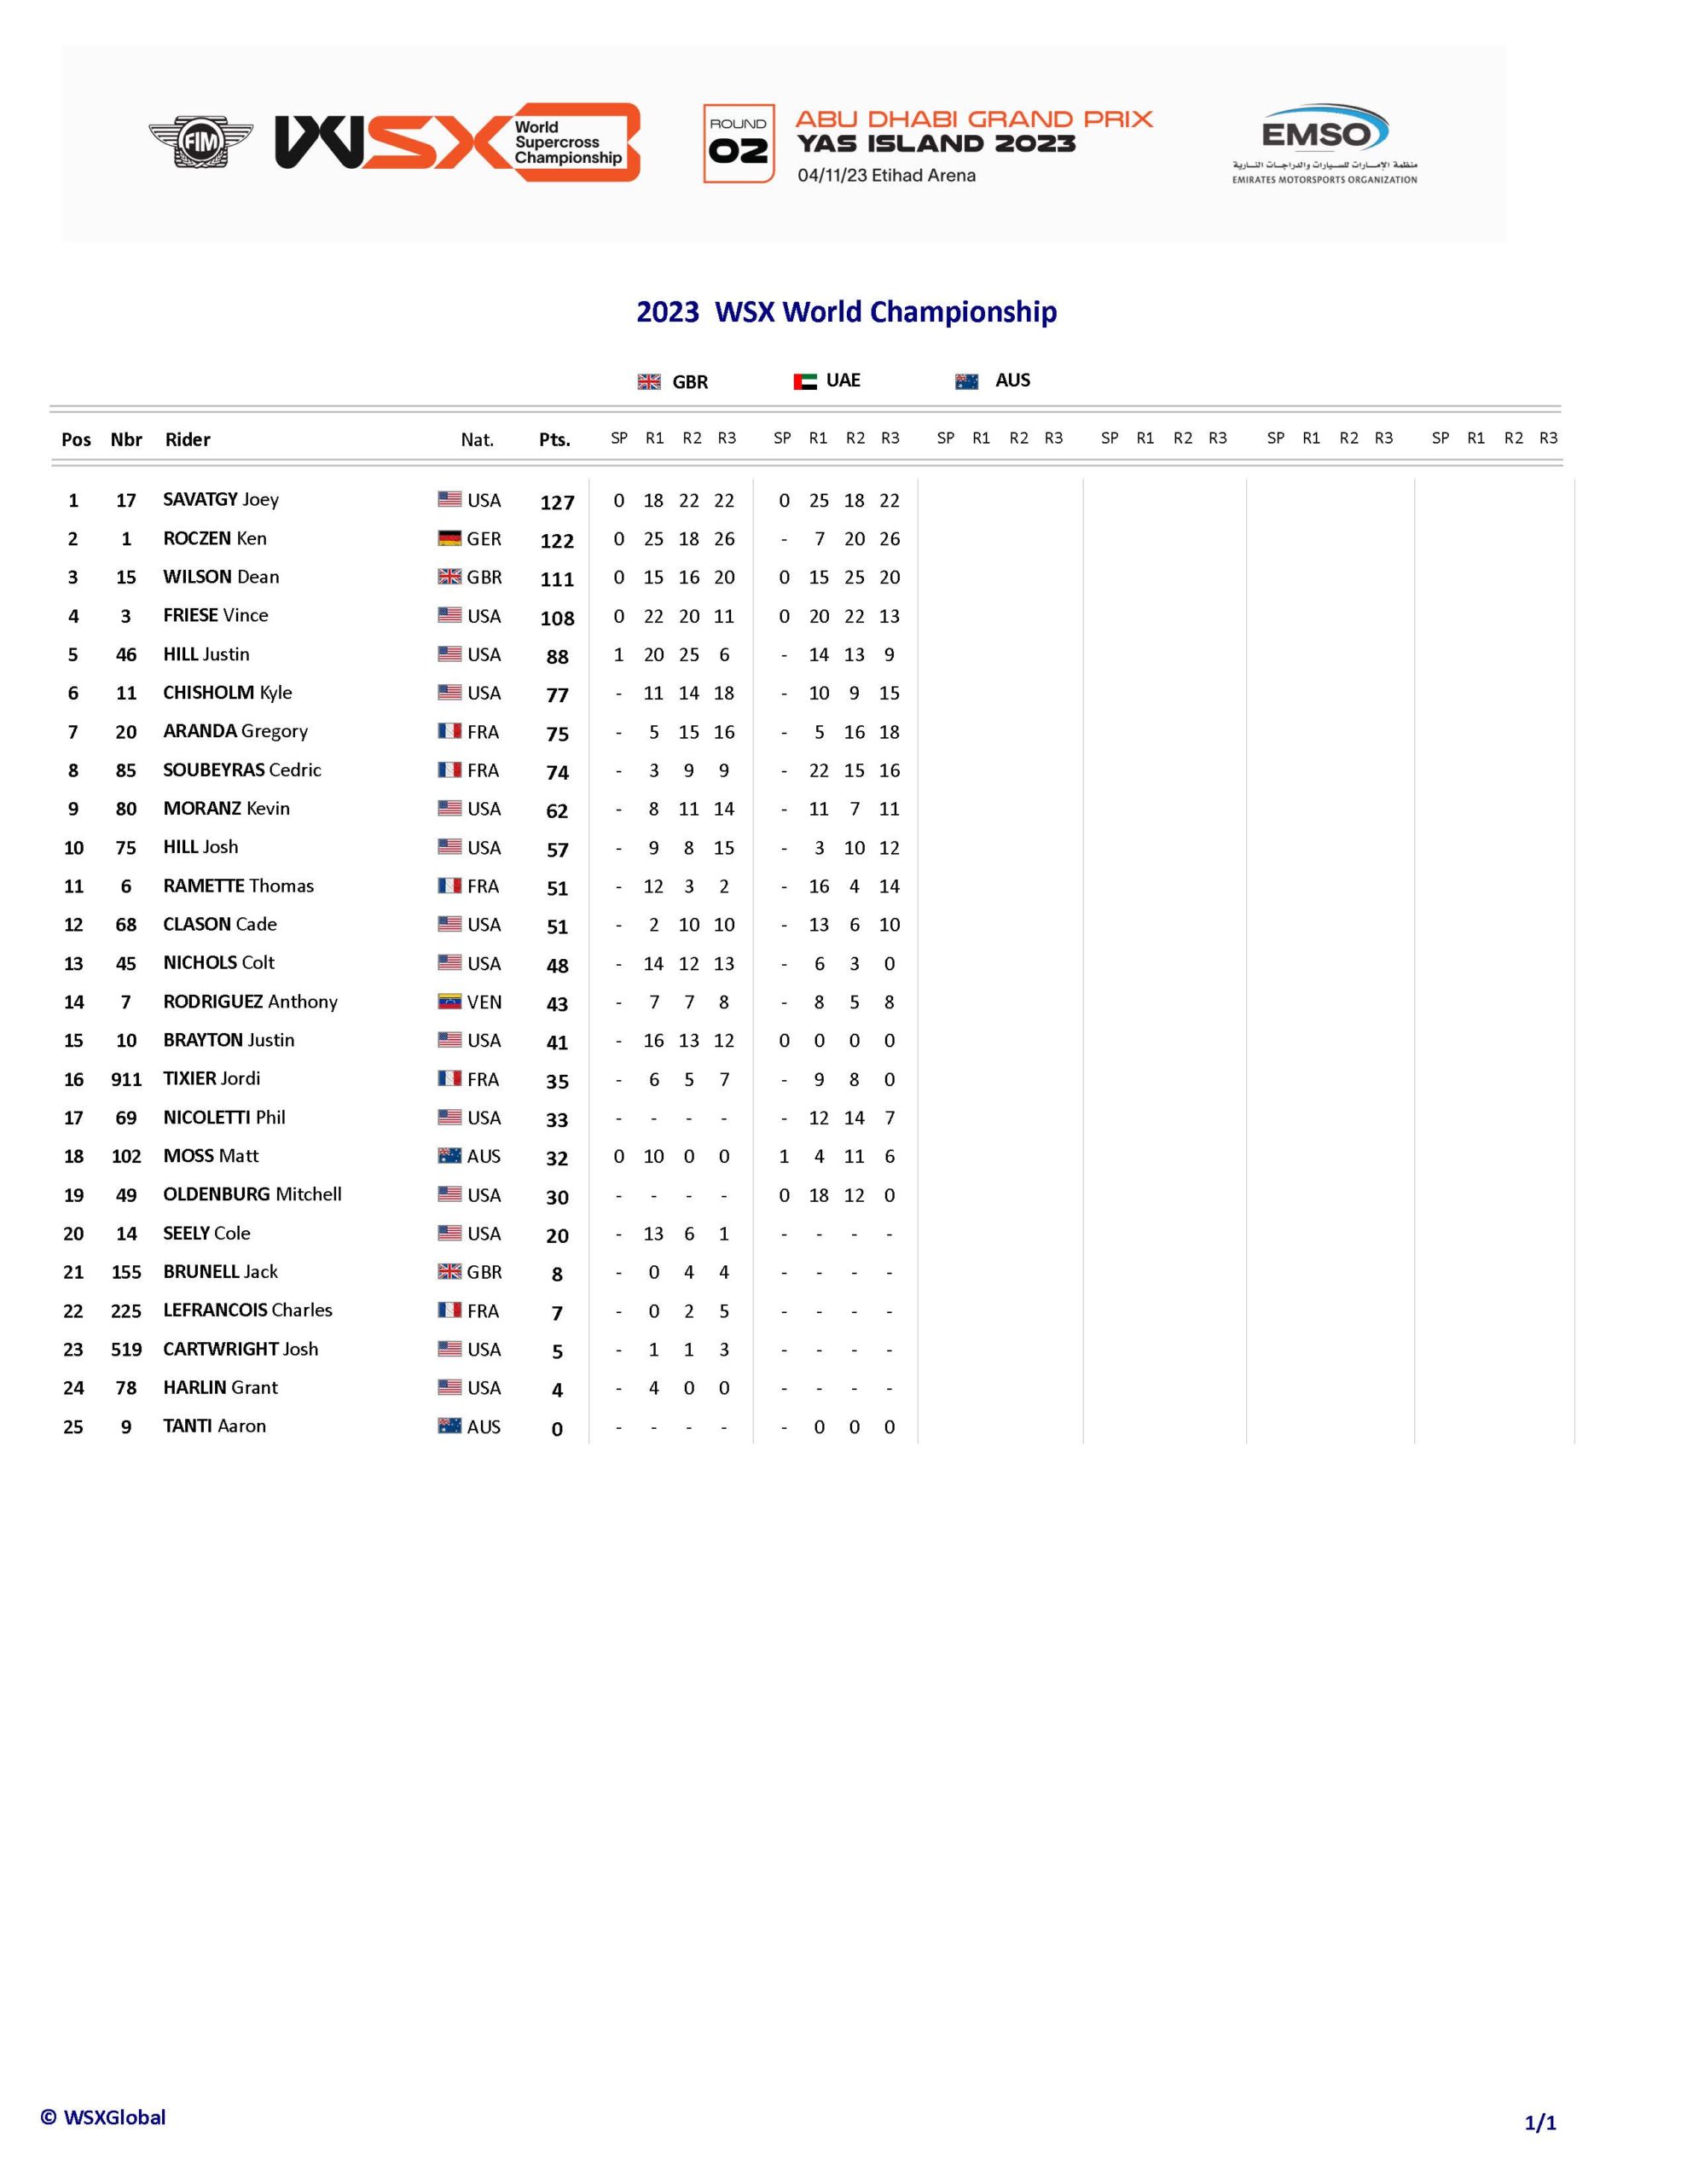 2023 WSX Abu Dhabi GP Race Report & Results Swapmoto Live